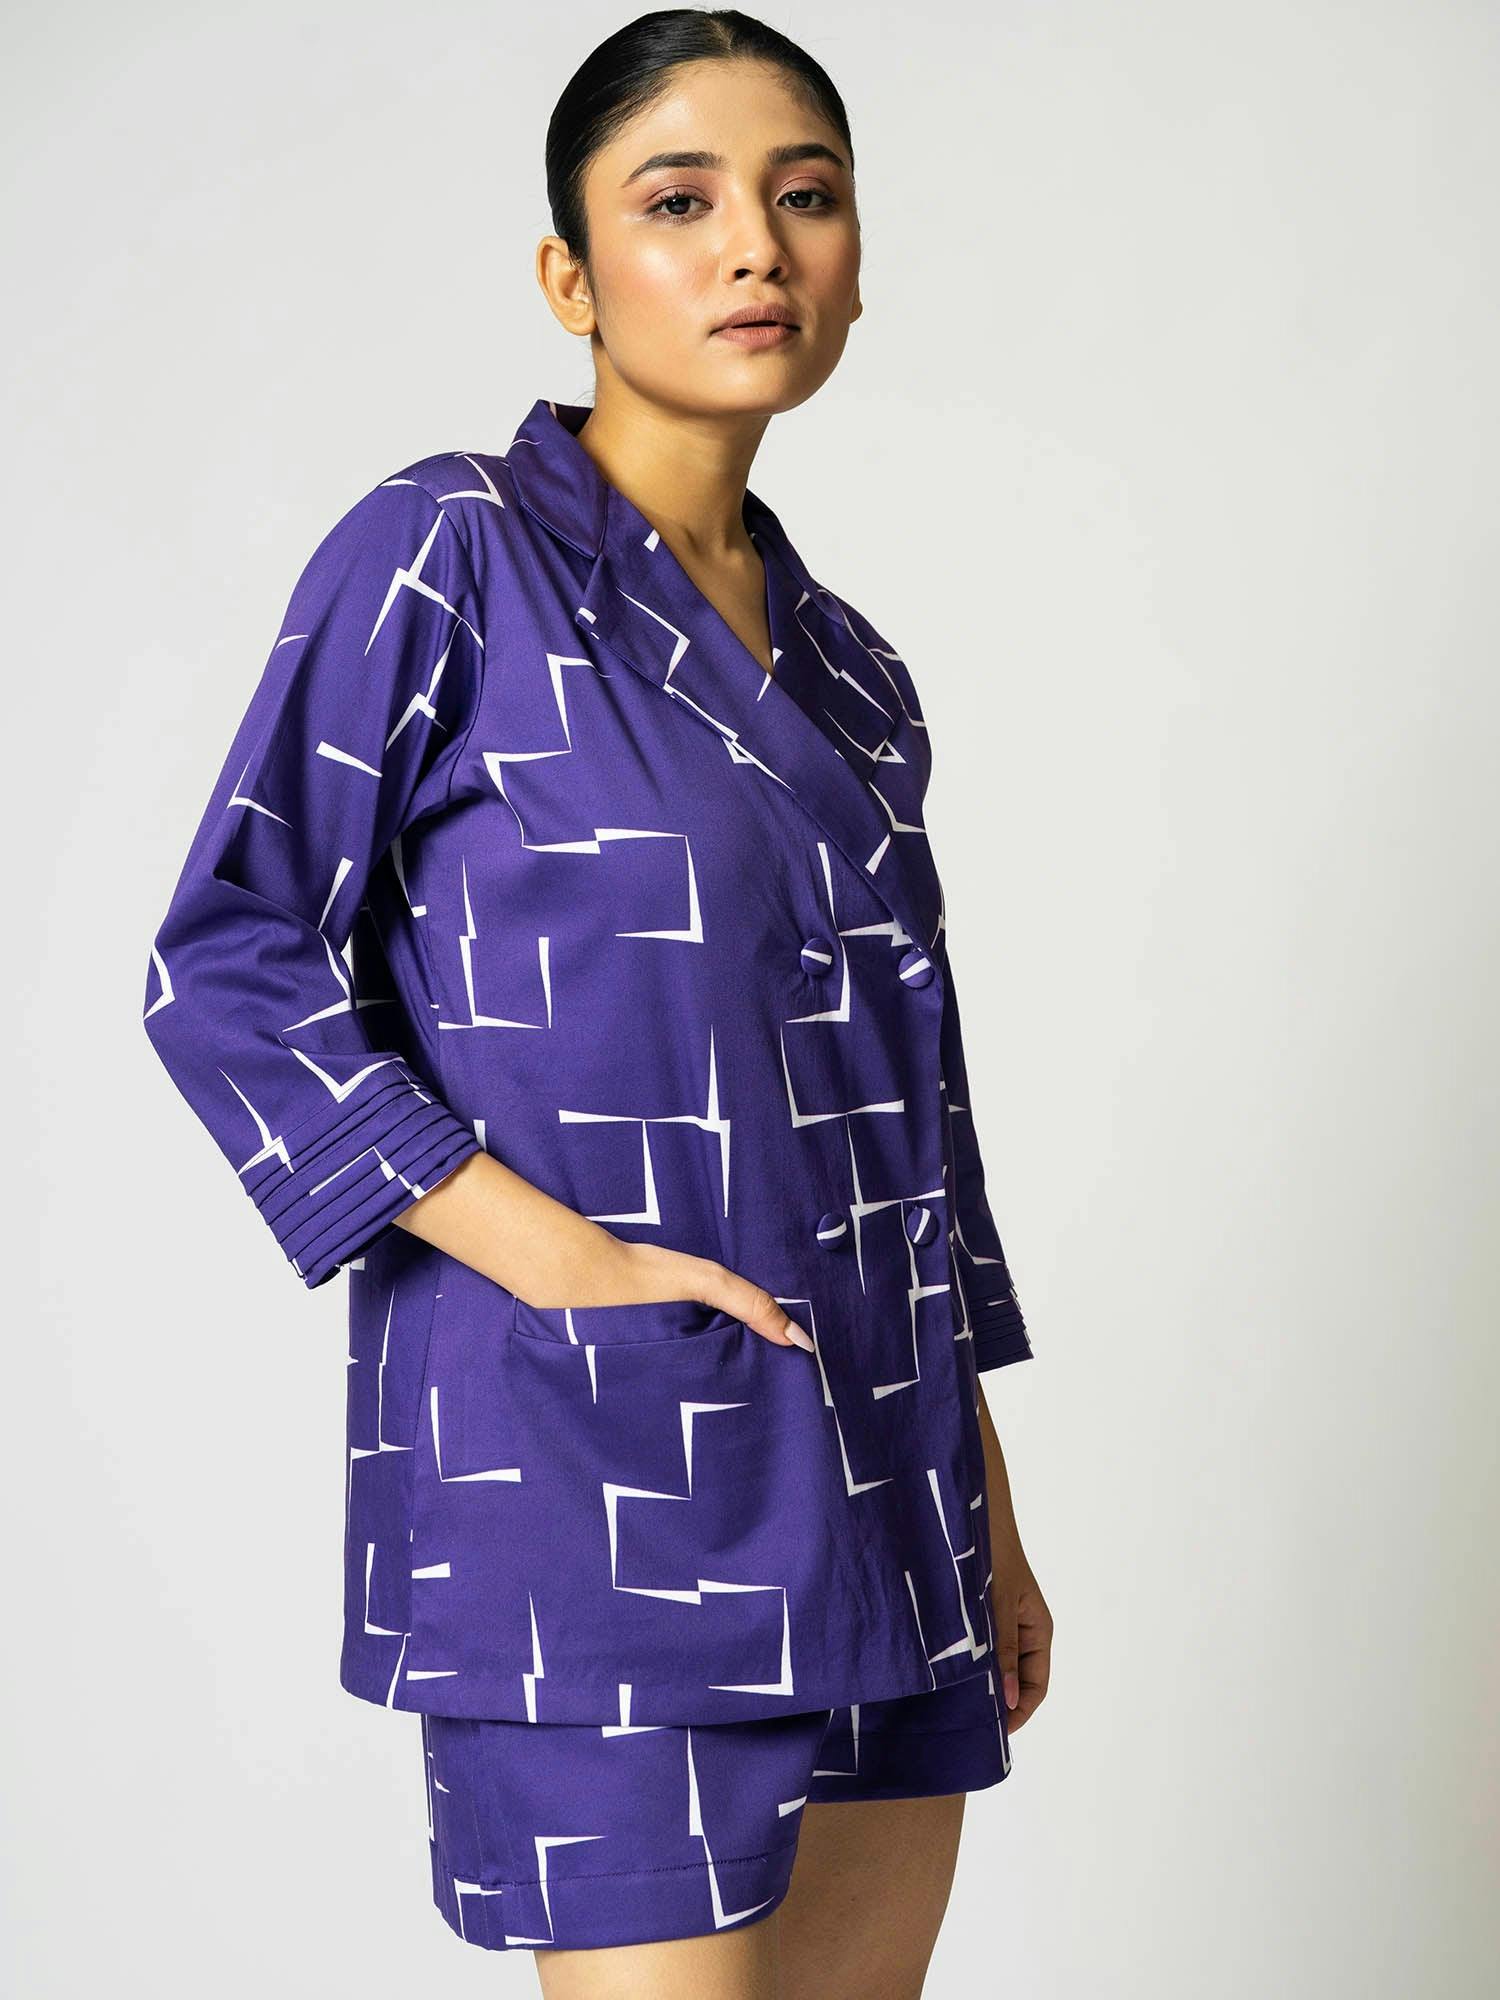 Brick Purple Shirt, a product by KLAD